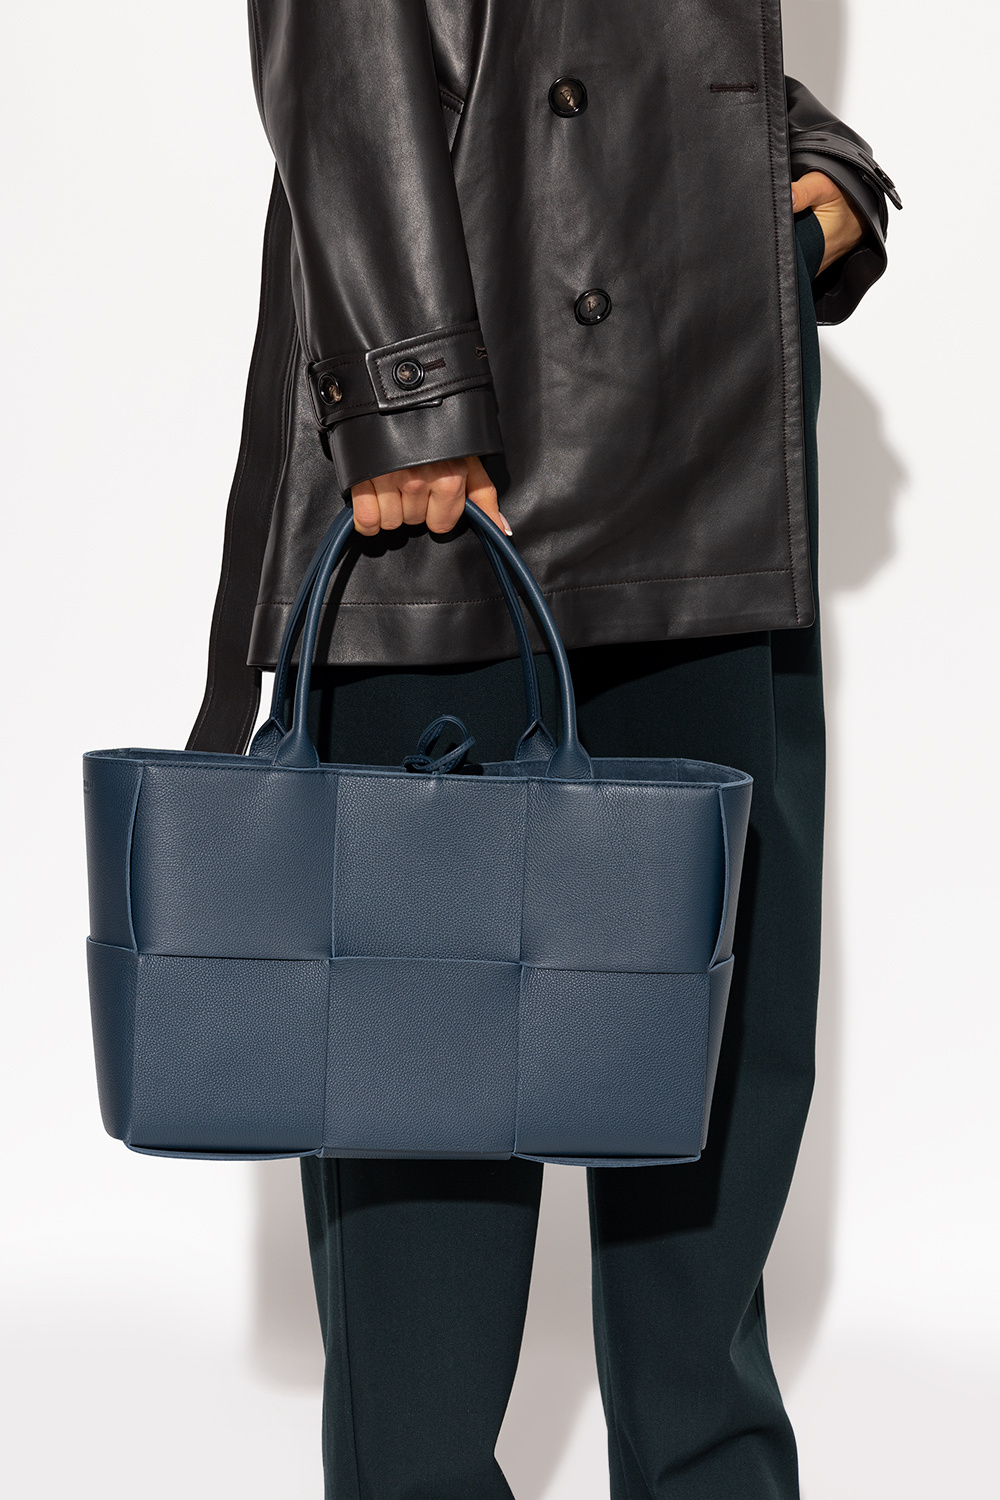 bottega coil Veneta ‘Arco Medium’ shopper bag